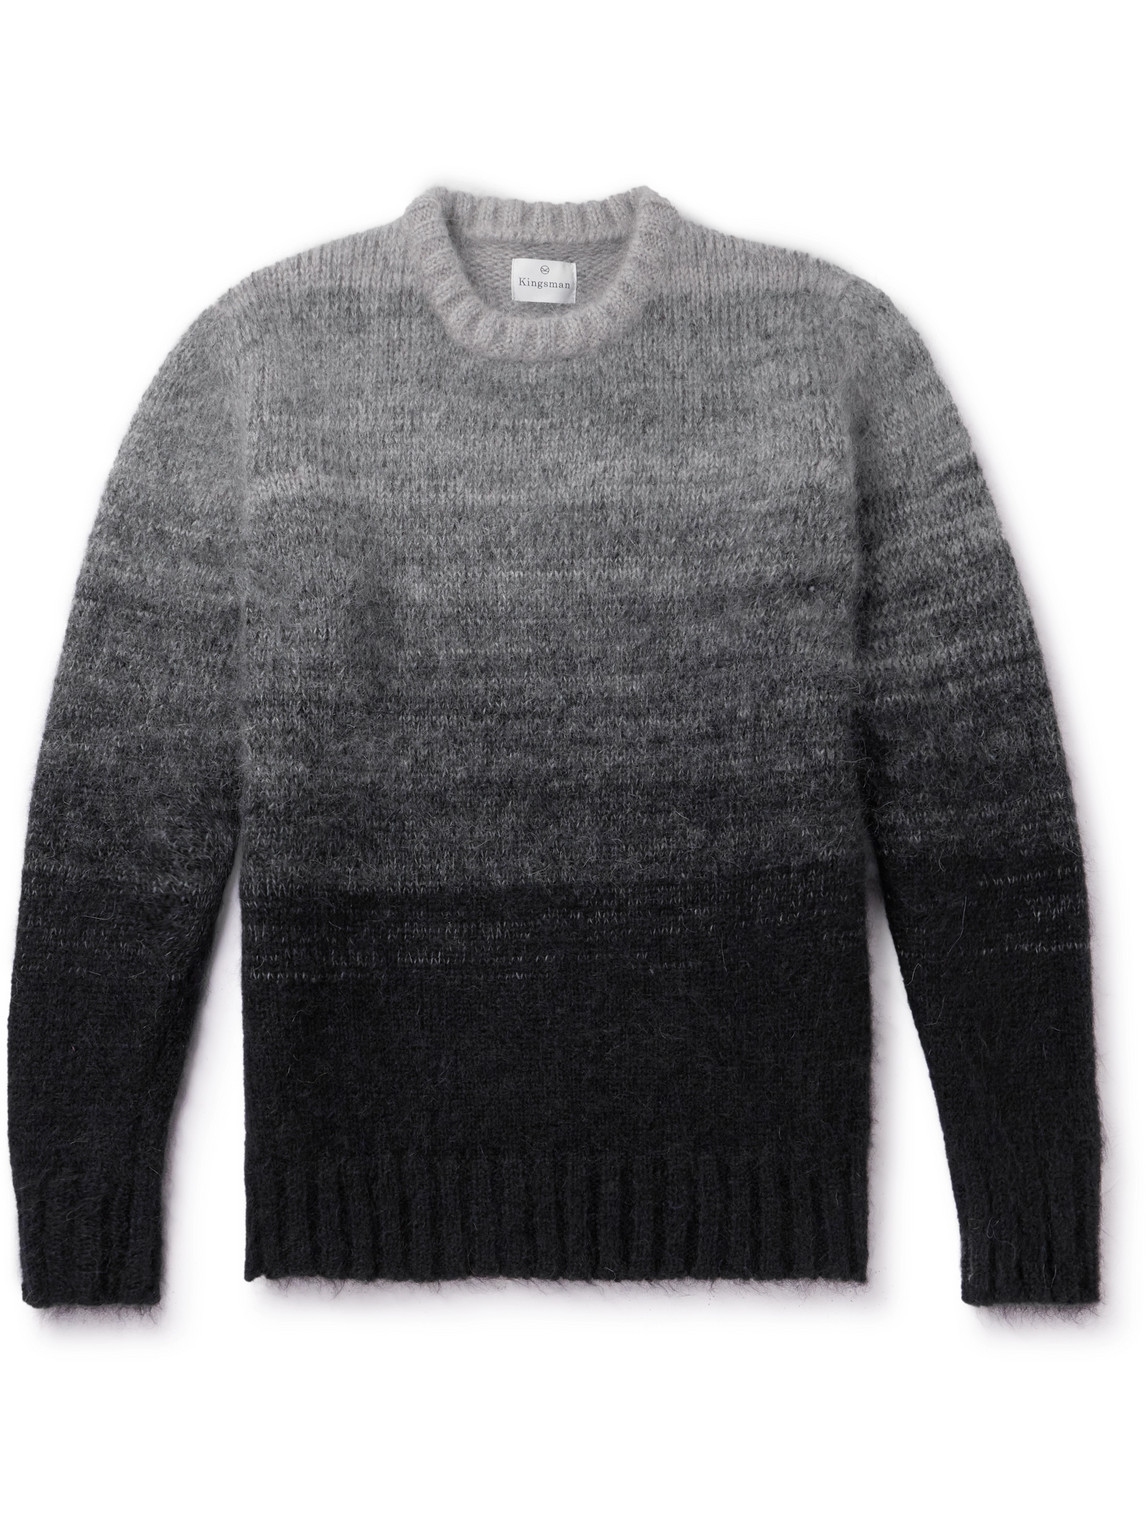 Kingsman Dégradé Knitted Sweater In Gray